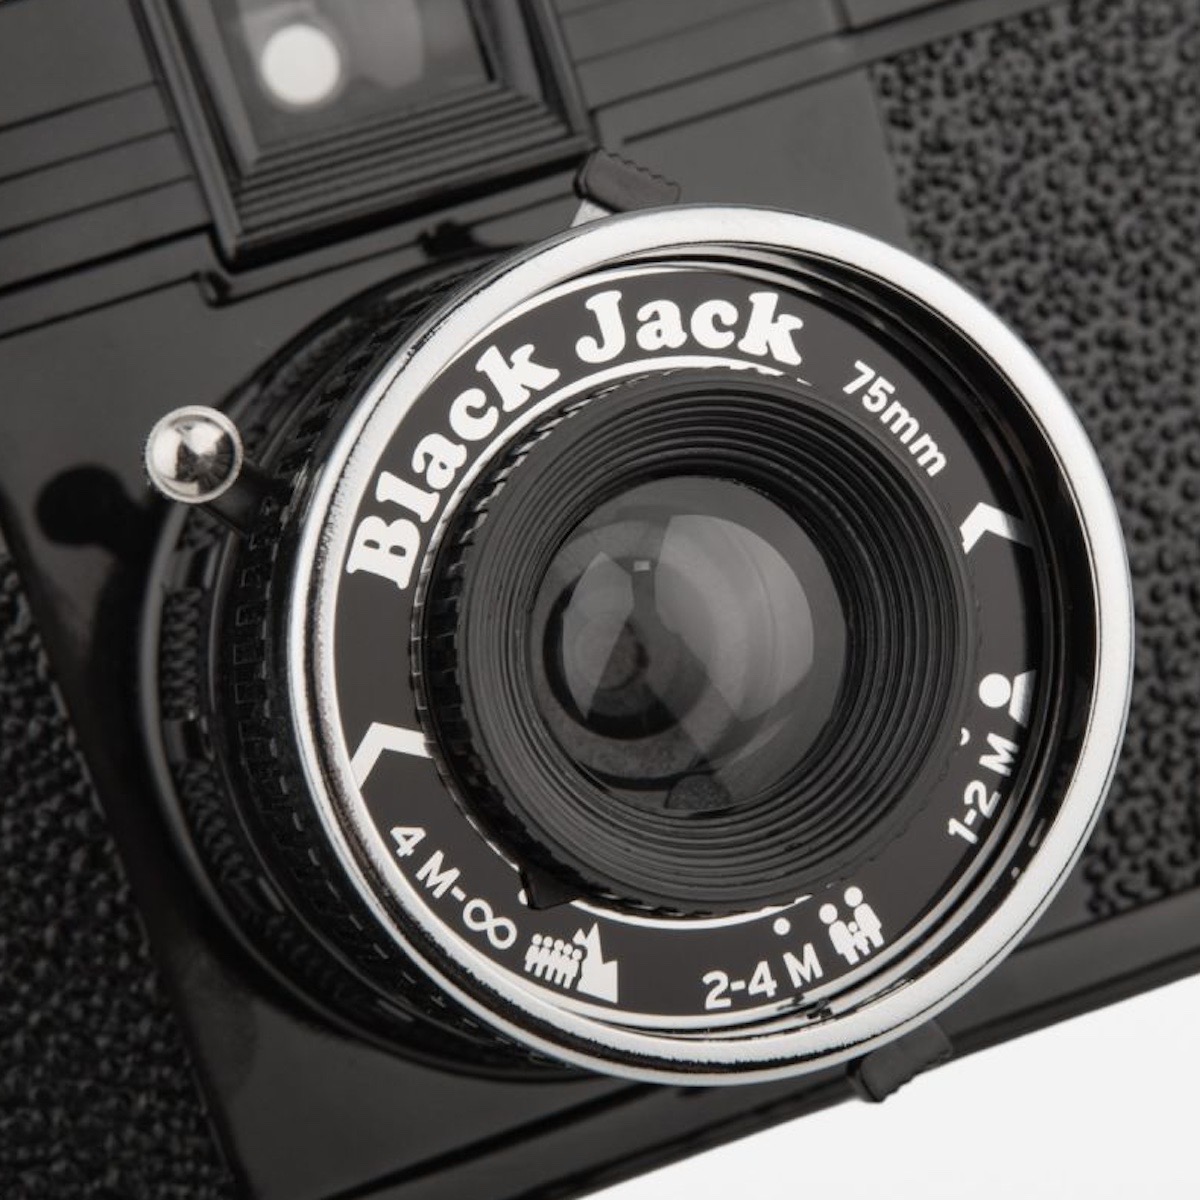 Lomography Diana F+ Kamera & Blitz Black Jack